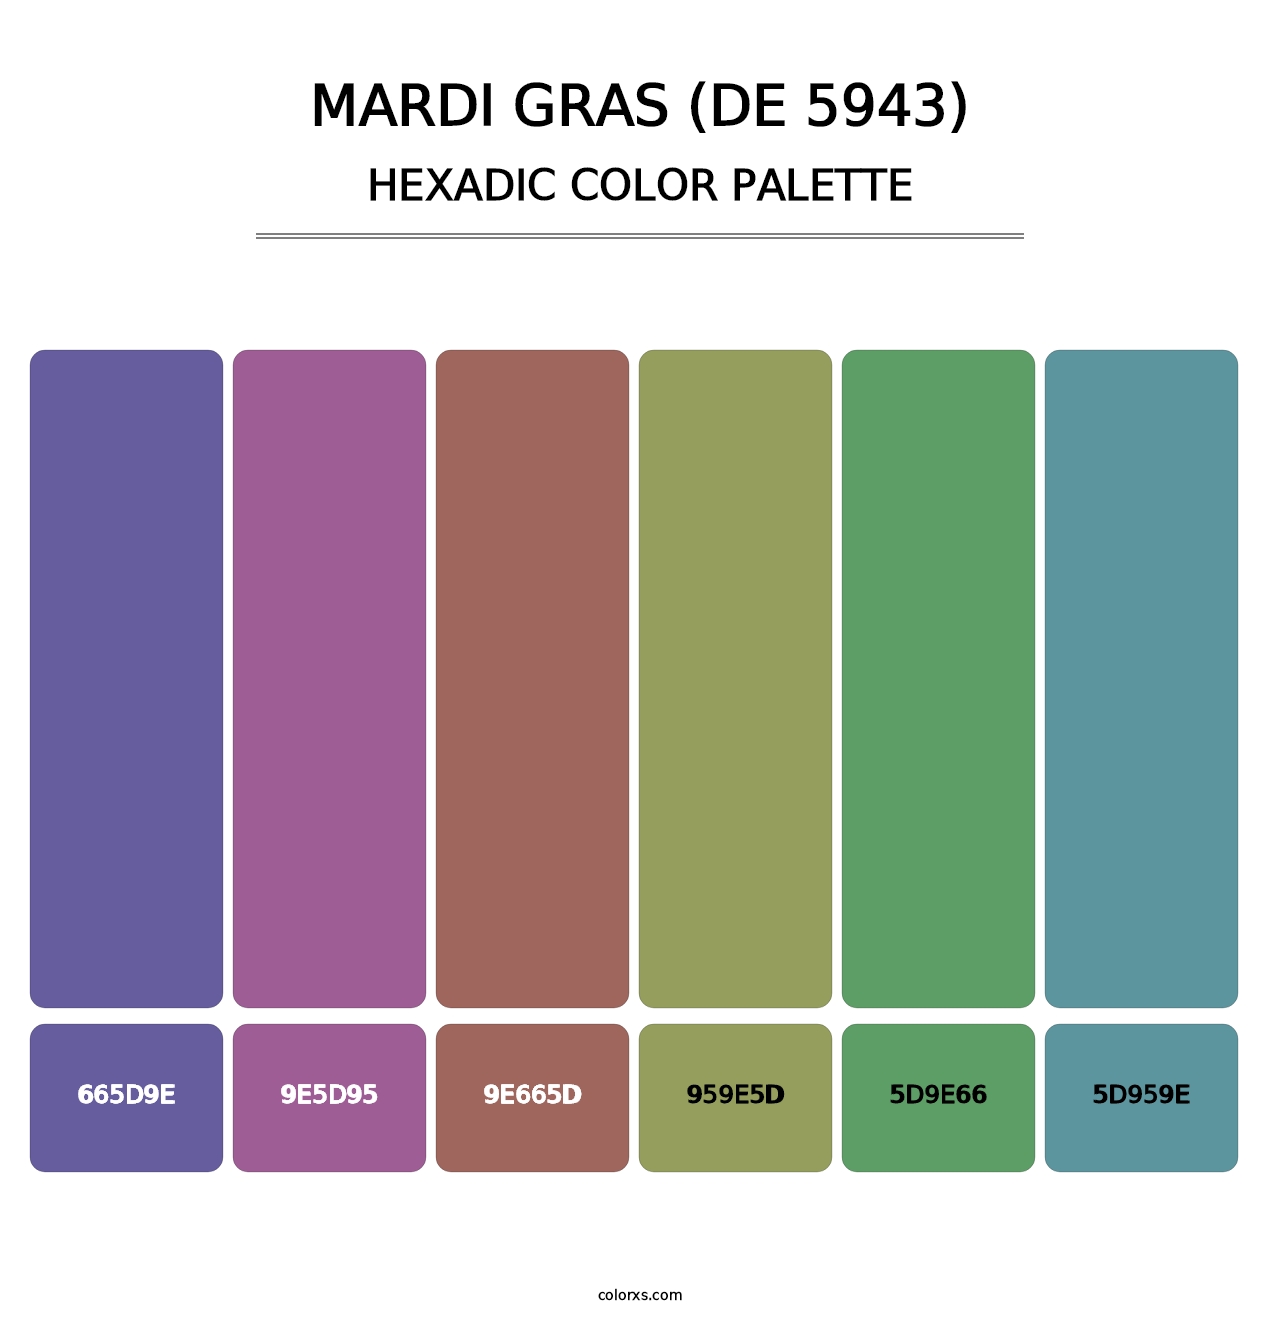 Mardi Gras (DE 5943) - Hexadic Color Palette